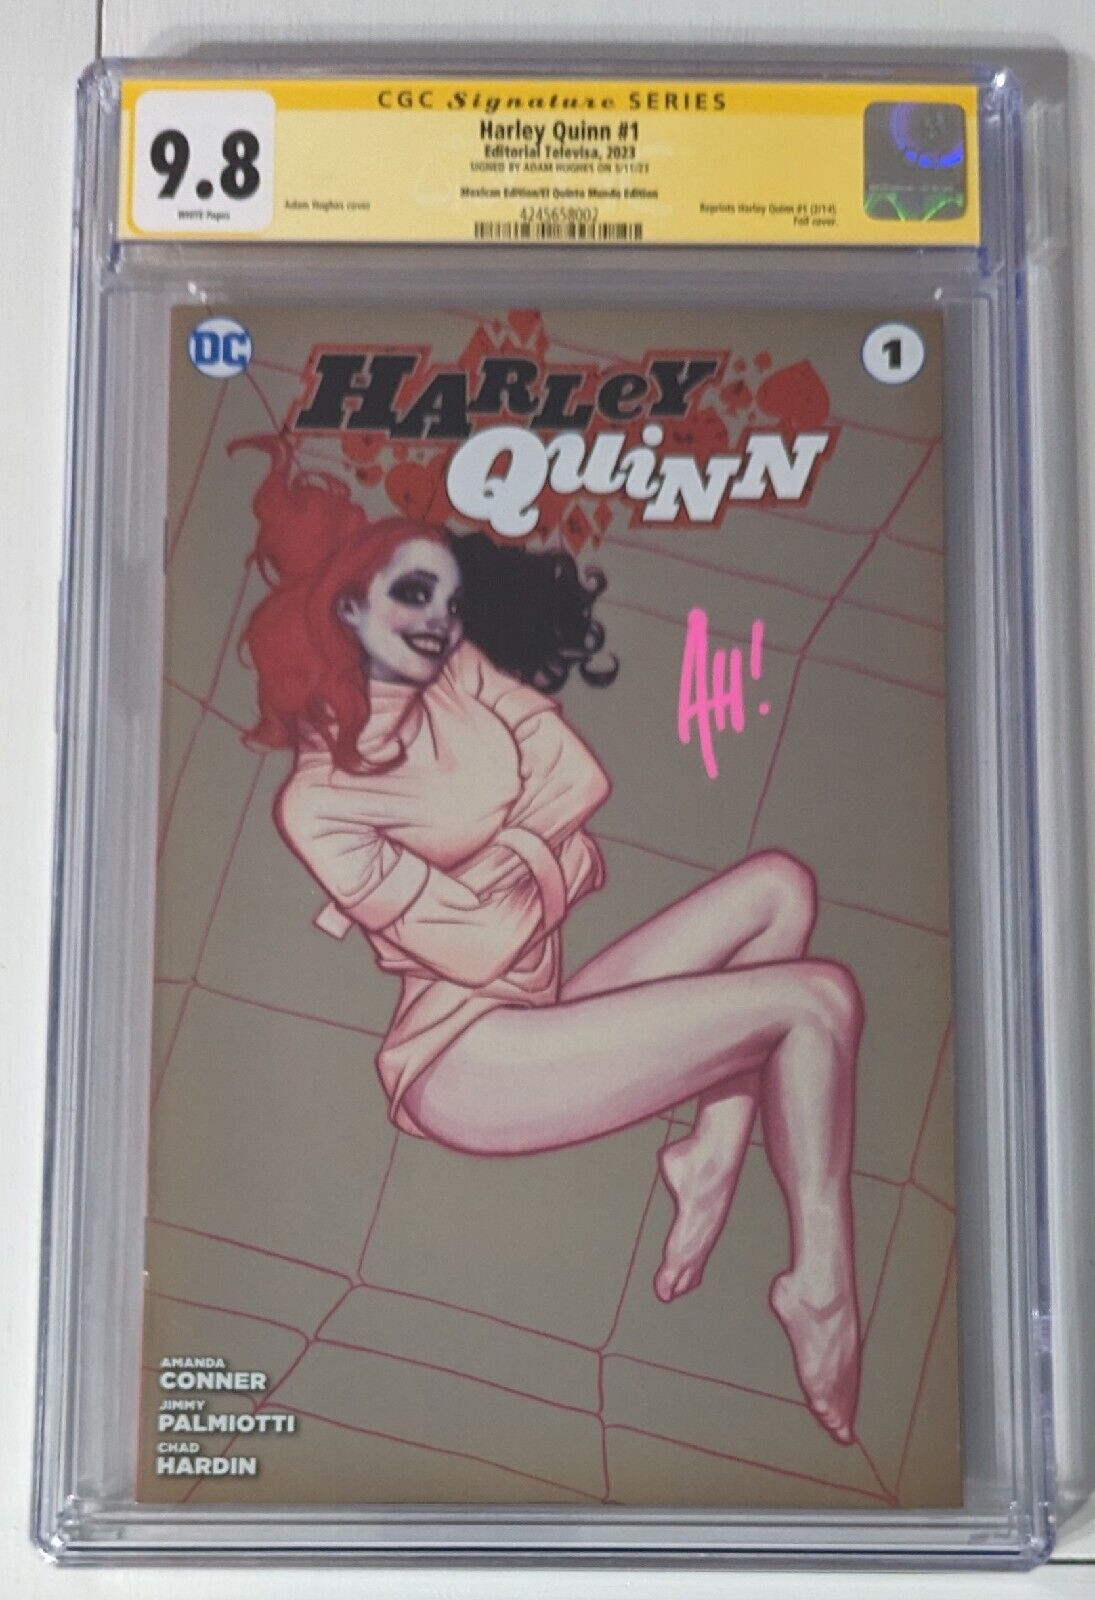 Harley Quinn #1 CGC 9.8 SS La Mole foil Signed by Adam Hughes (Pink)